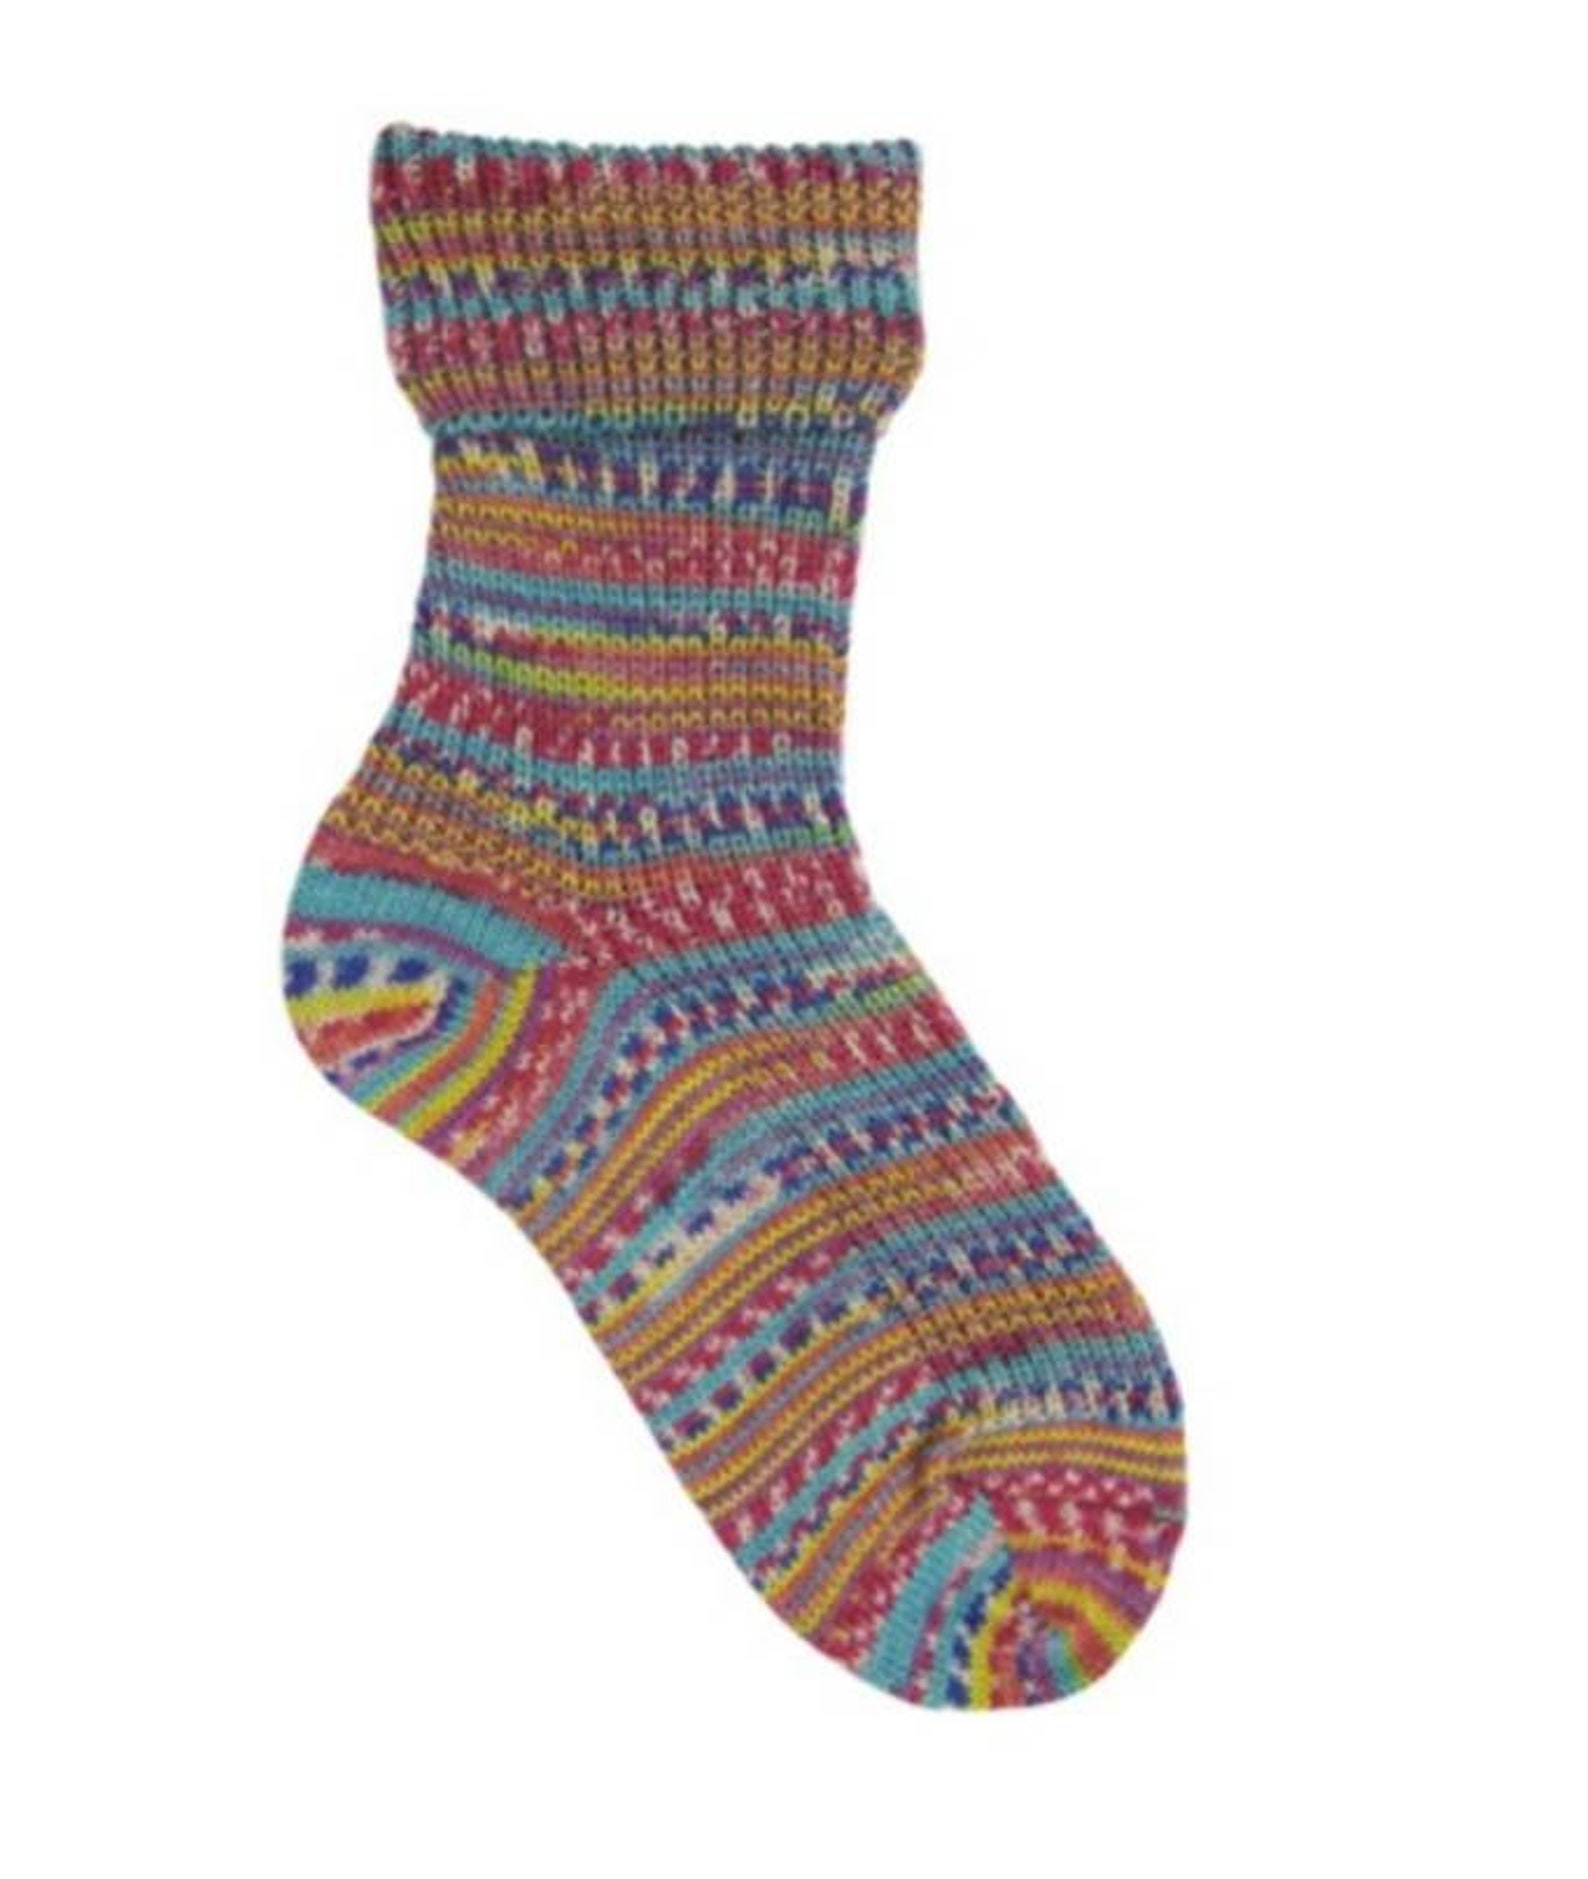 Opal yarn Self striping sock knitting kit | Etsy